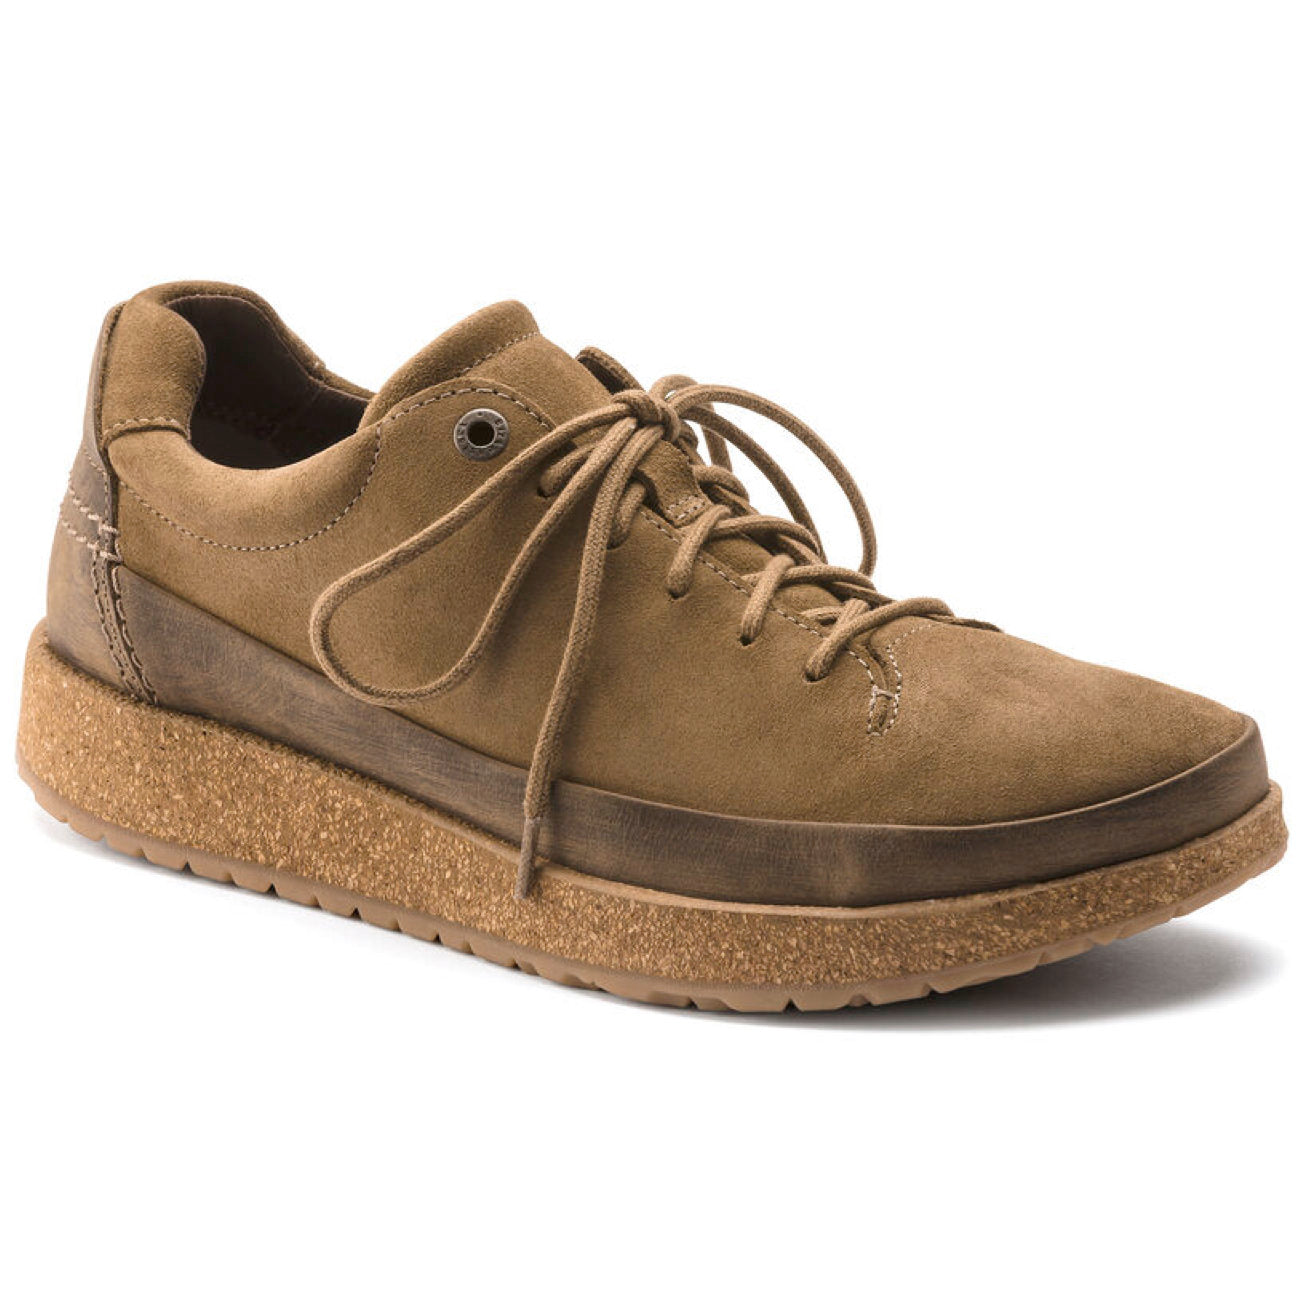 Birkenstock Shoes, Honnef Low, Suede Leather, Regular Fit, Tea Suede Shoes Birkenstock Seasonal Tea Suede 40 